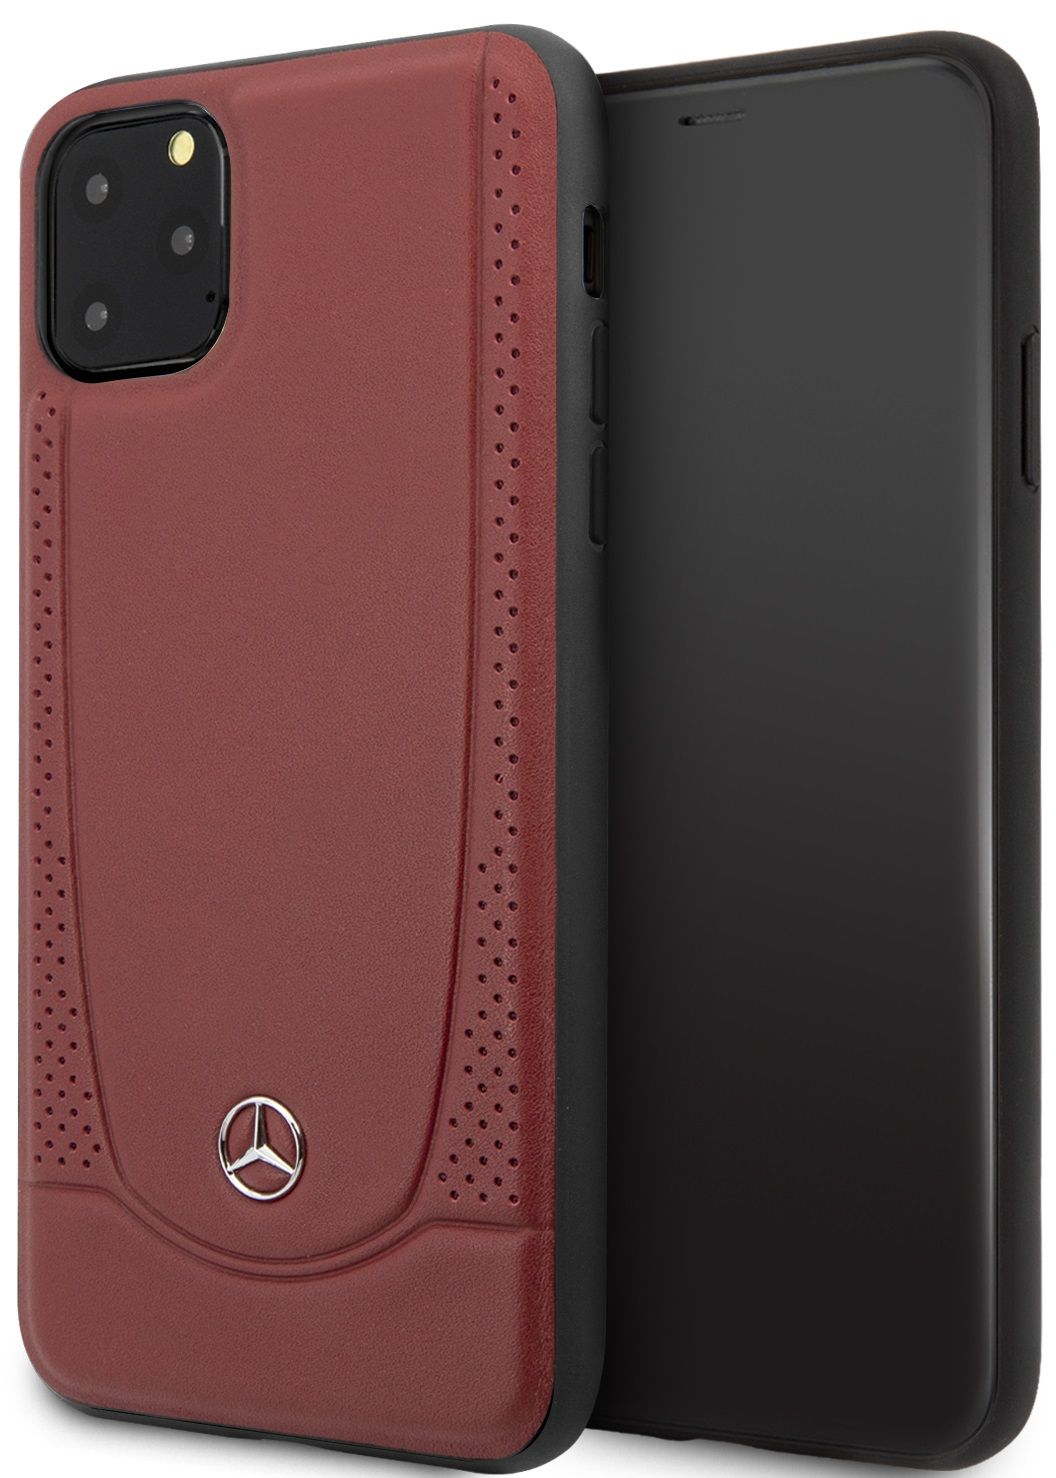 Чехол Mercedes для iPhone 11 Pro Max Urban Smooth/perforated Hard Leather Red, картинка 1